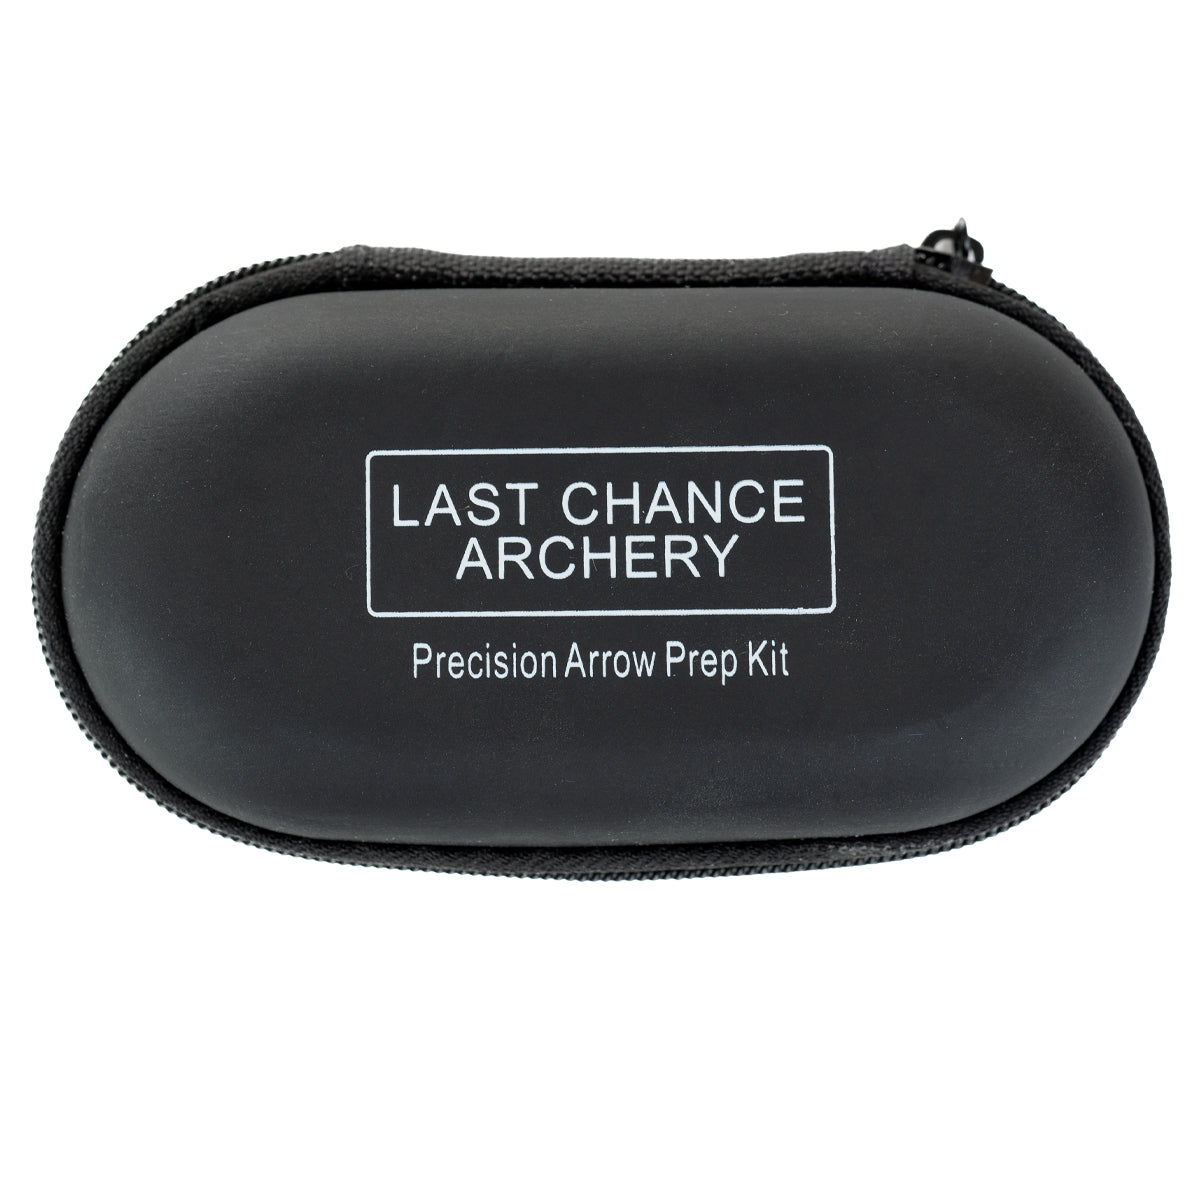 Last Chance Archery Precision Arrow Prep Kit in  by GOHUNT | Last Chance Archery - GOHUNT Shop